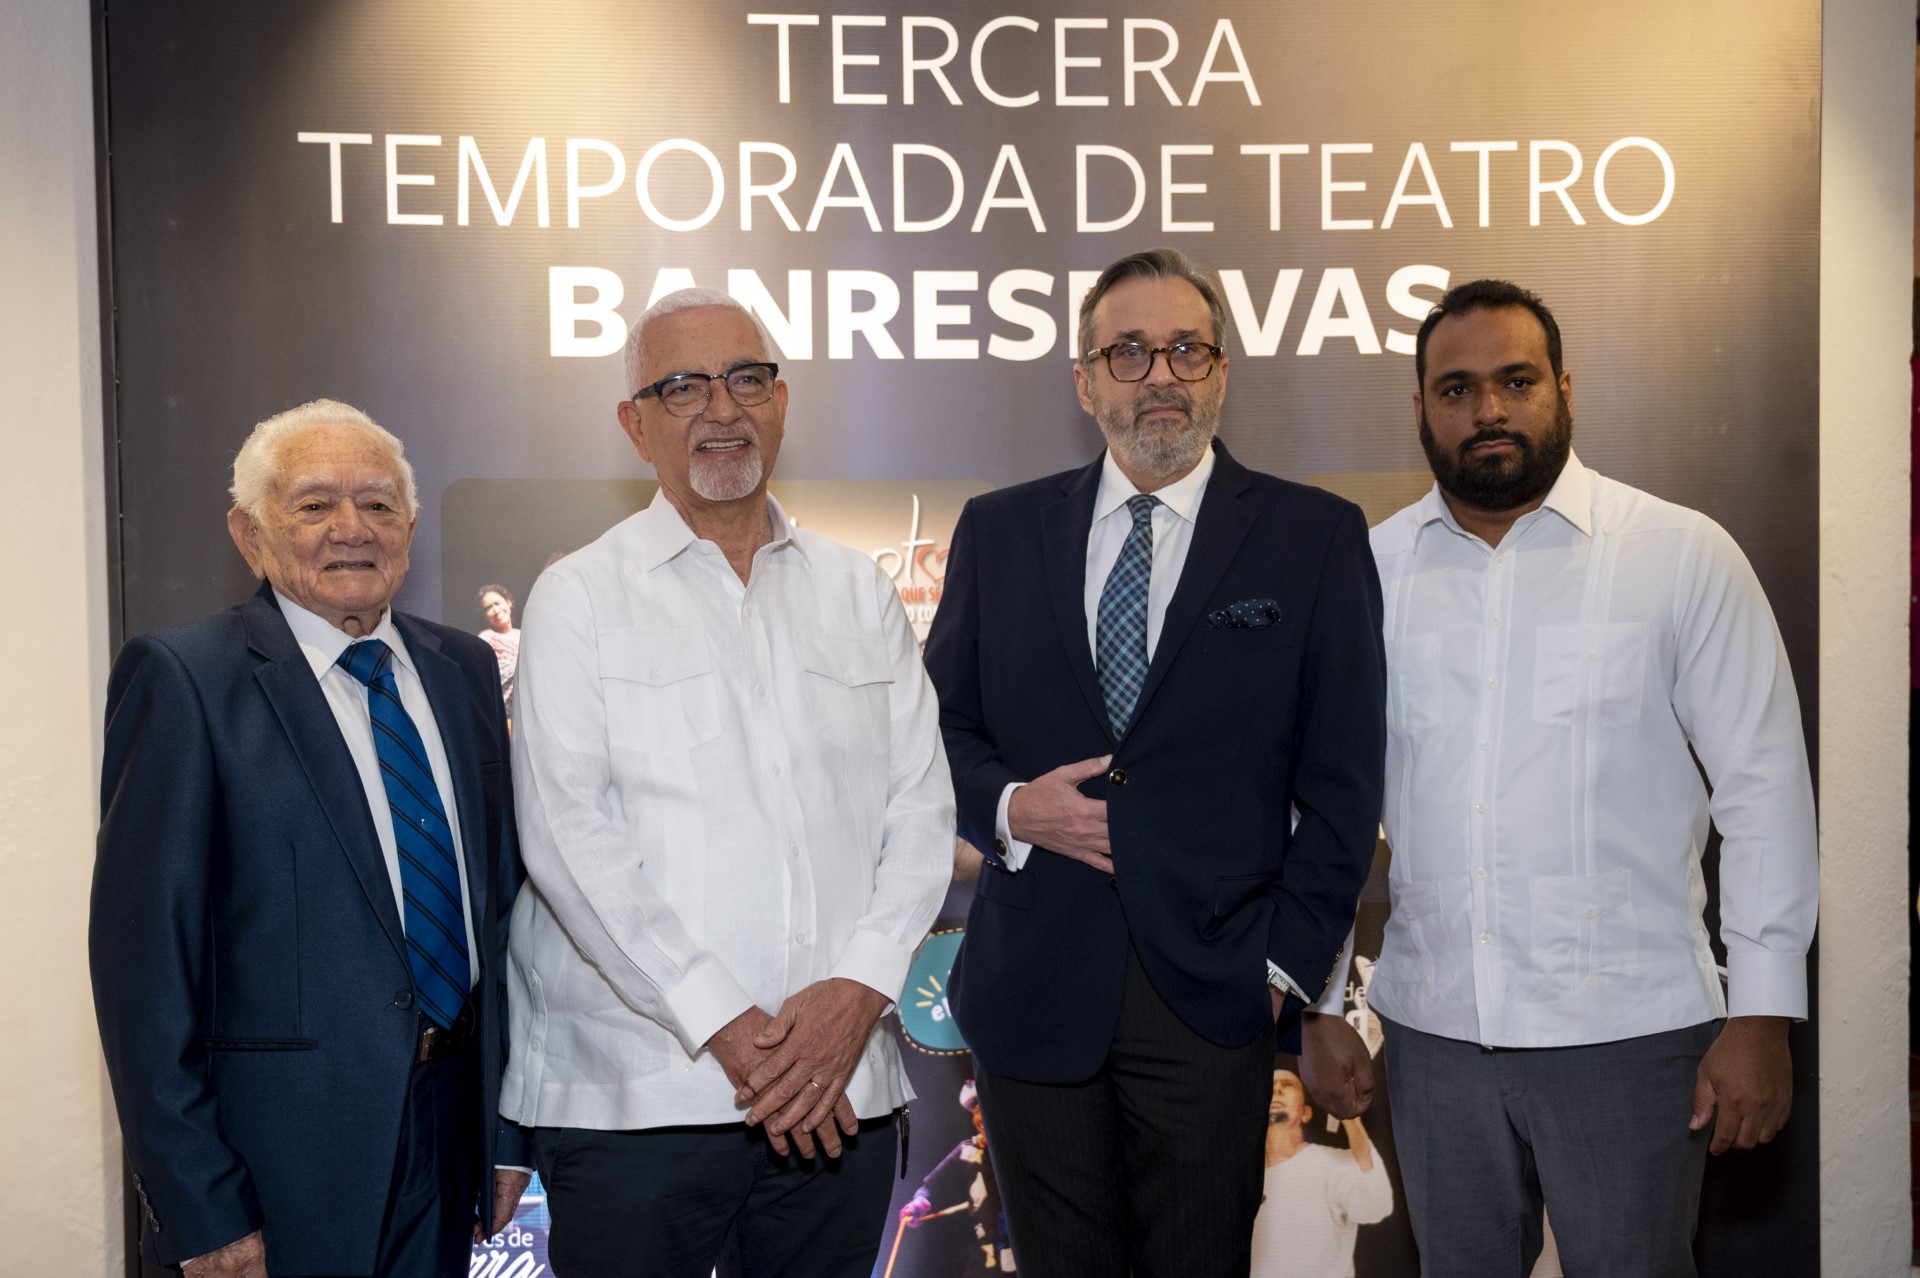 Centro Cultural Banreservas presenta Tercera Temporada de Teatro Banreservas